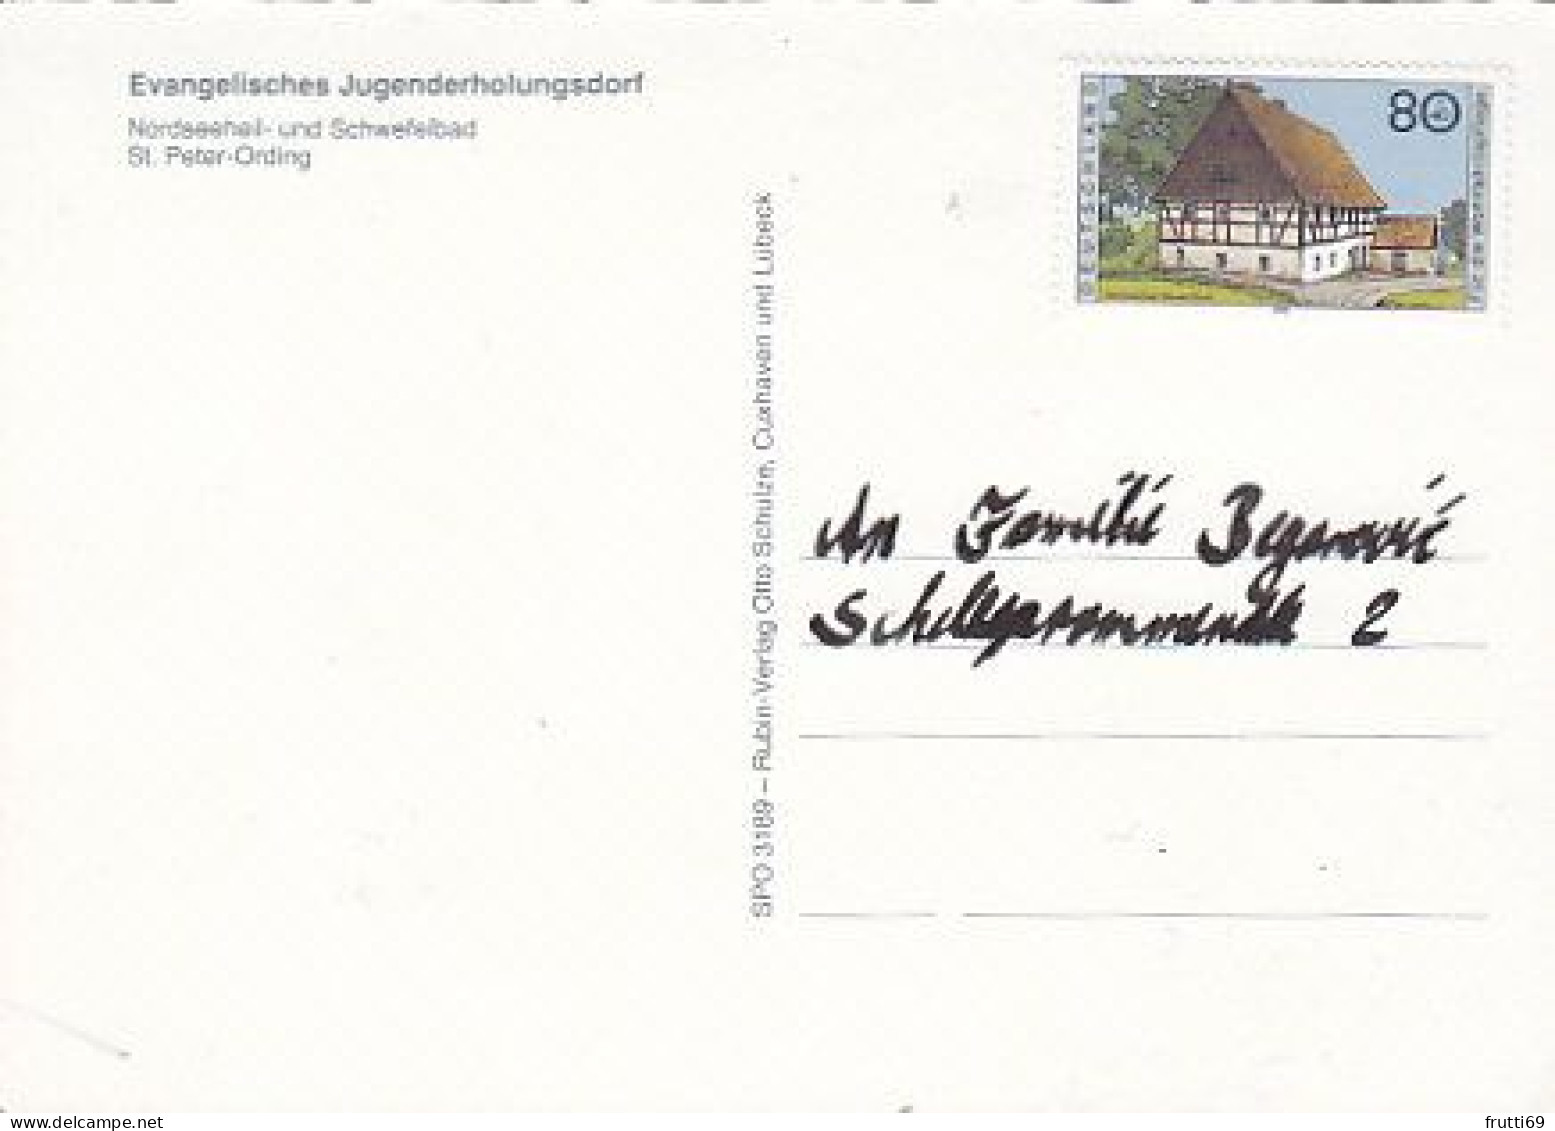 AK 209273 GERMANY - St. Peter-Ording - Evangelisches Jugendergolungsdorf - St. Peter-Ording